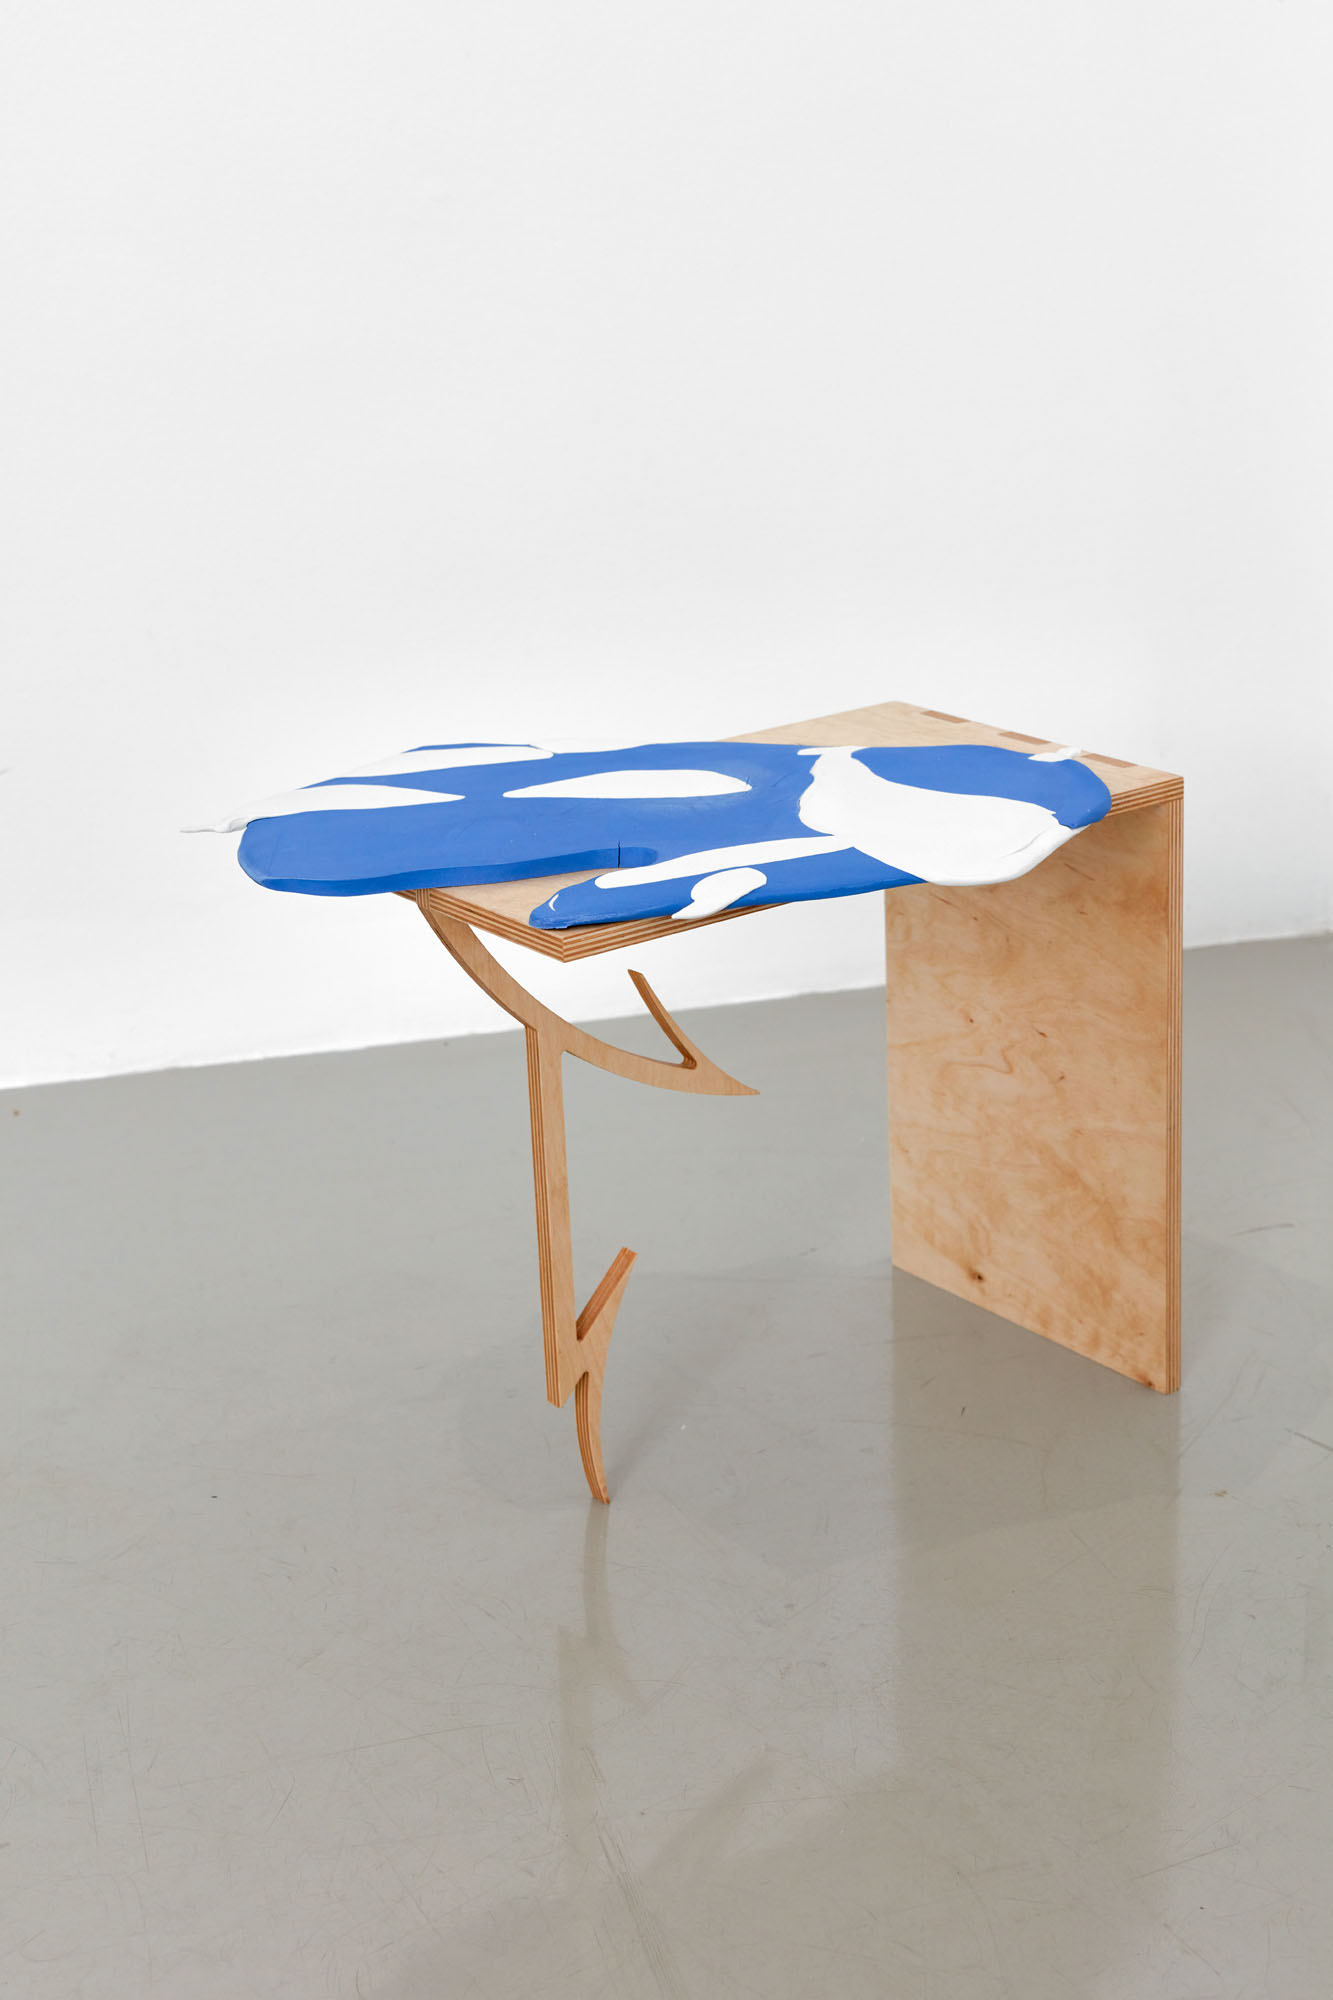 Downburst, 2021, birch plywood, porcelain
37 × 46 × 48 cm